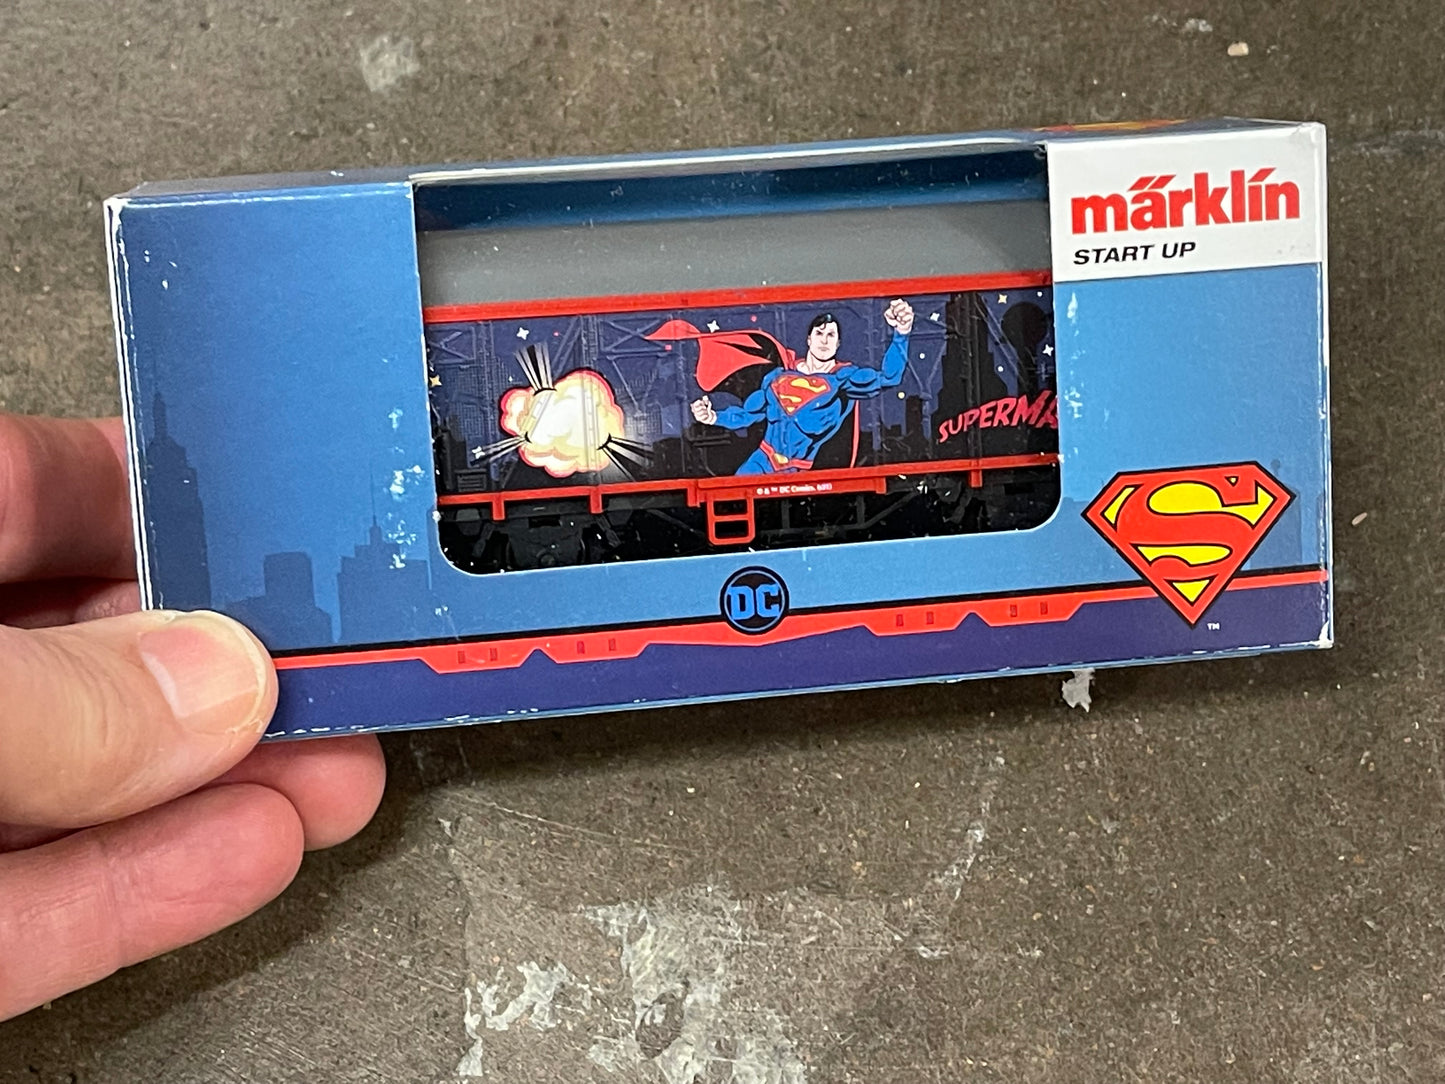 Marklin 44825 - Superman Boxcar